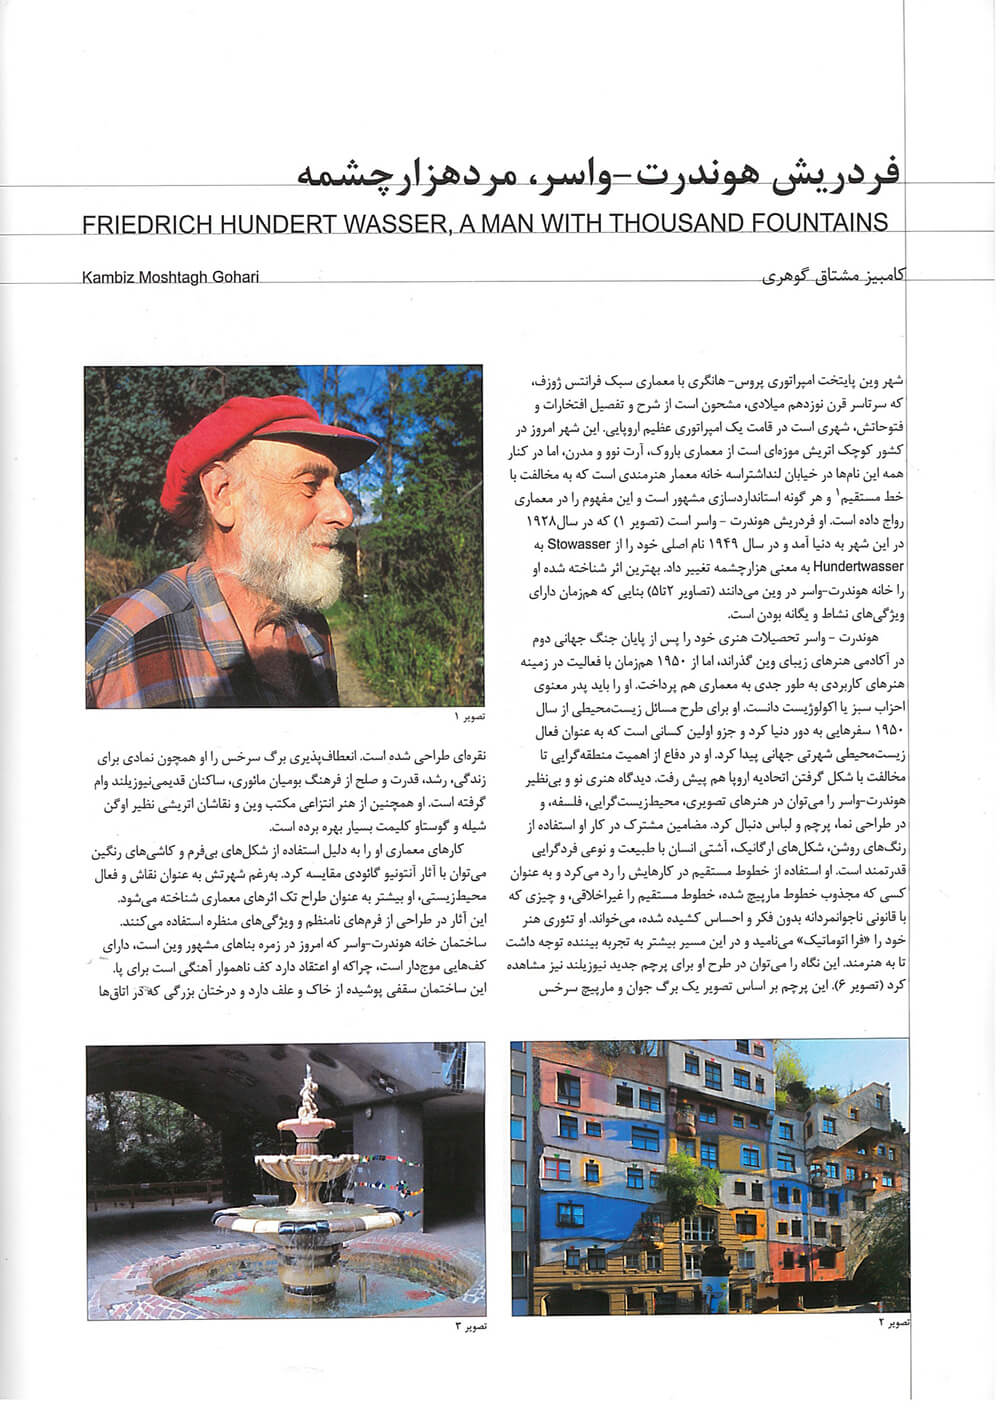 picture no. 2 of publication: friedrich hundert wasser a man wite thousand fountains, author: Kambiz Moshtaq